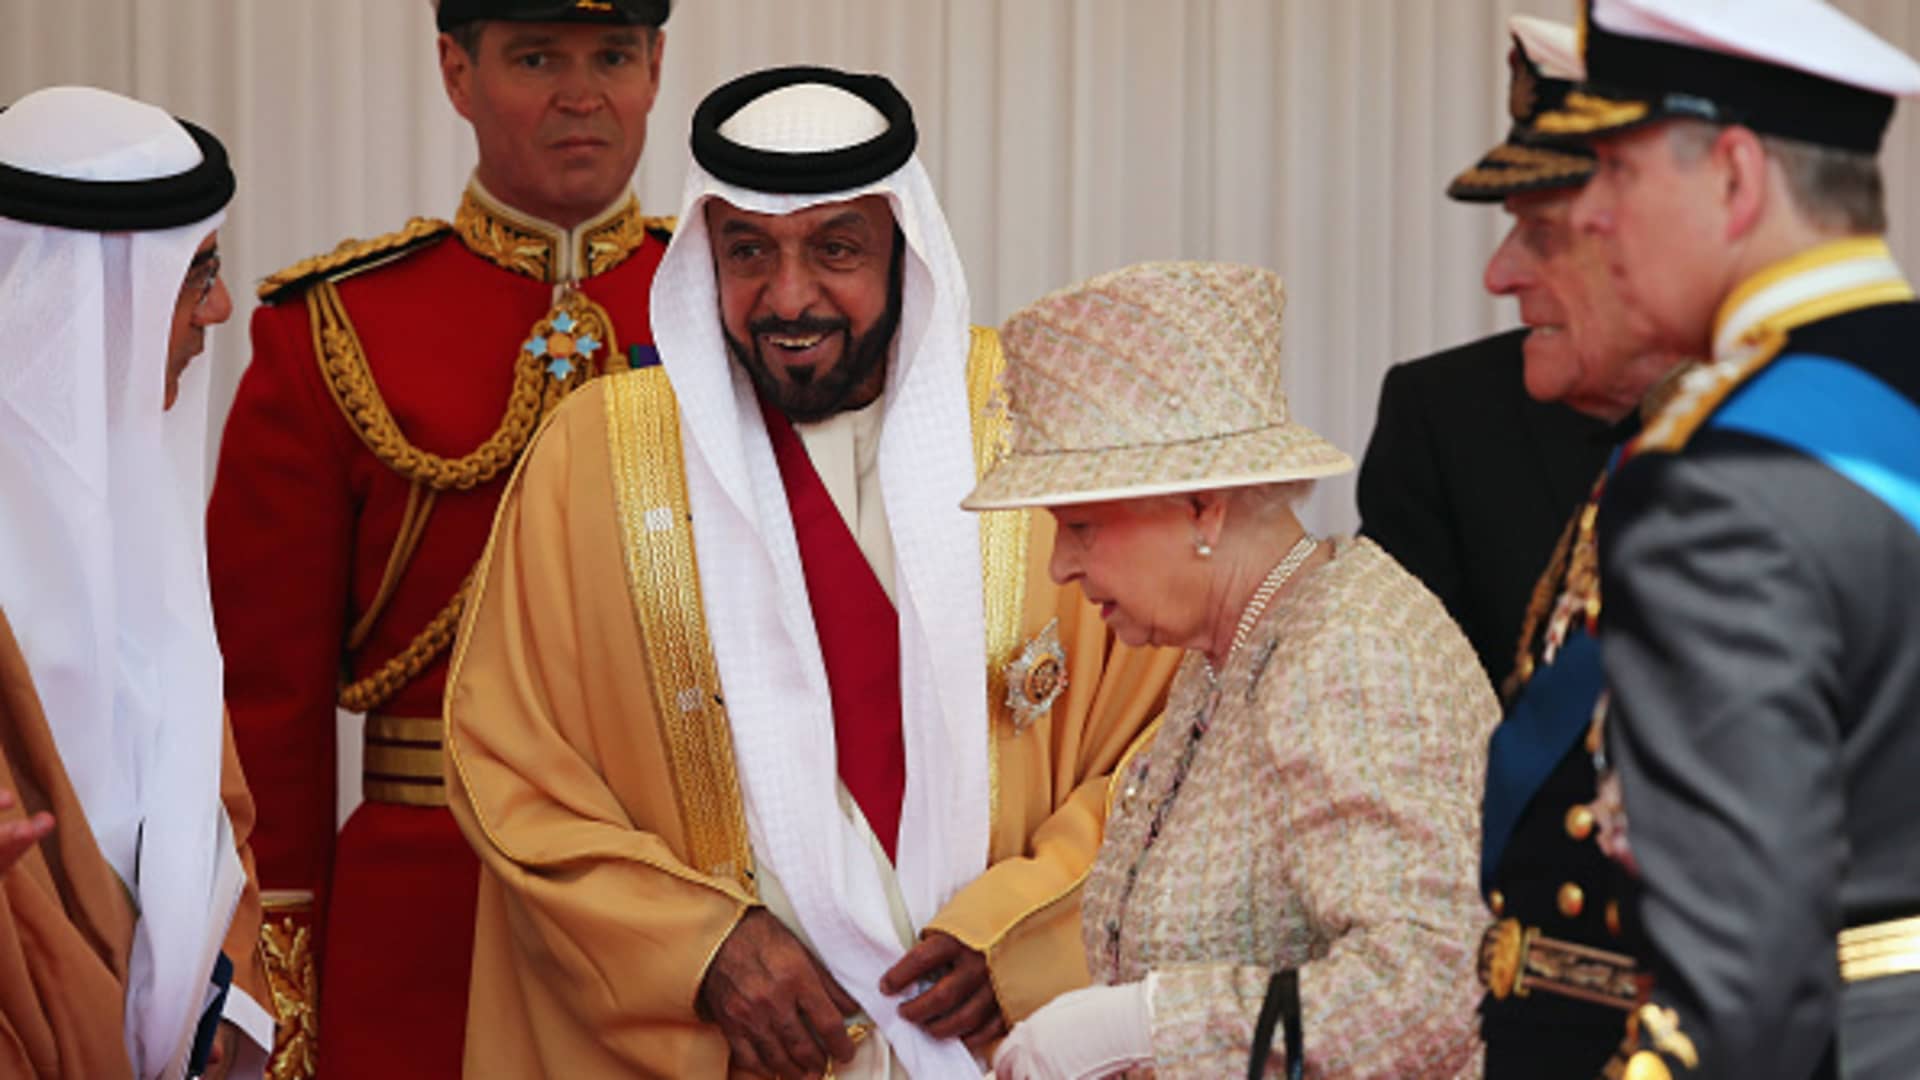 UAE President Sheikh Khalifa bin Zayed has died